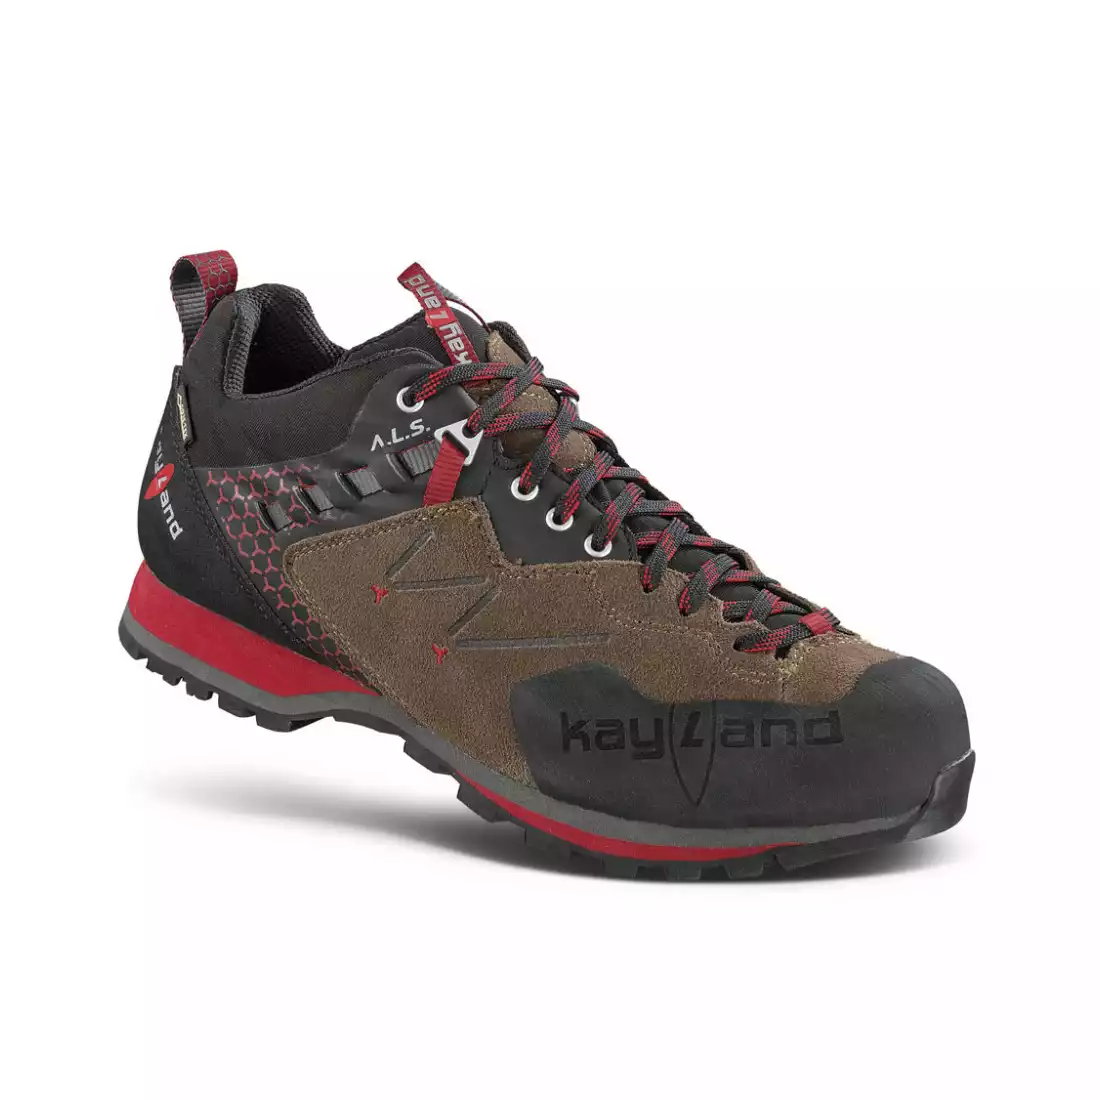 KAYLAND VITRIK GTX Men's approach hiking boots, GORE-TEX, VIBRAM, Brown